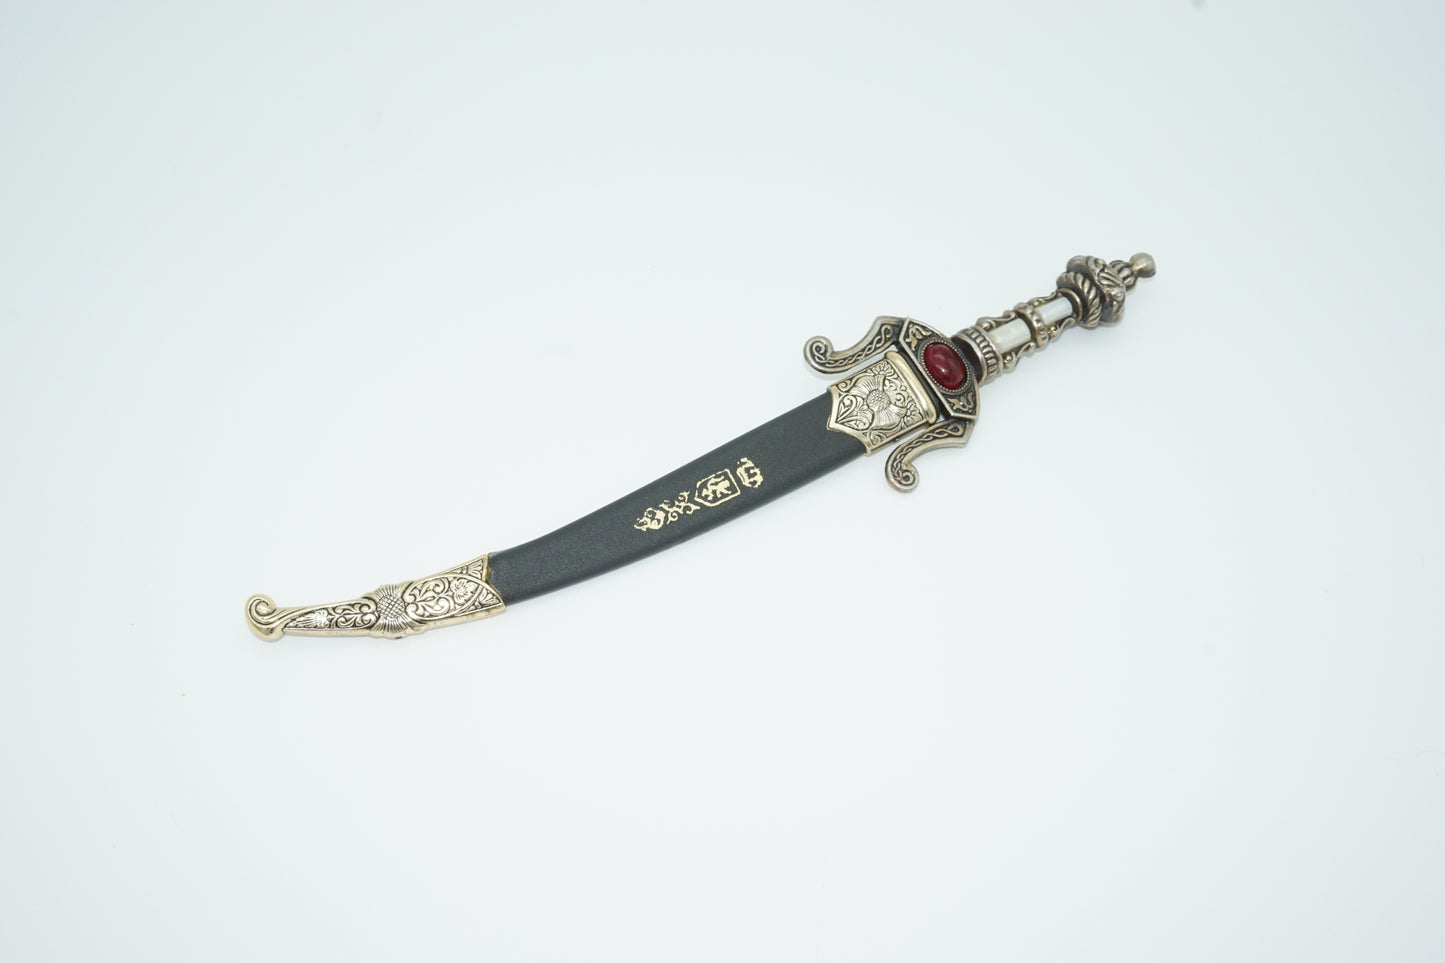 Spanish Toledo Dagger inside its sheath